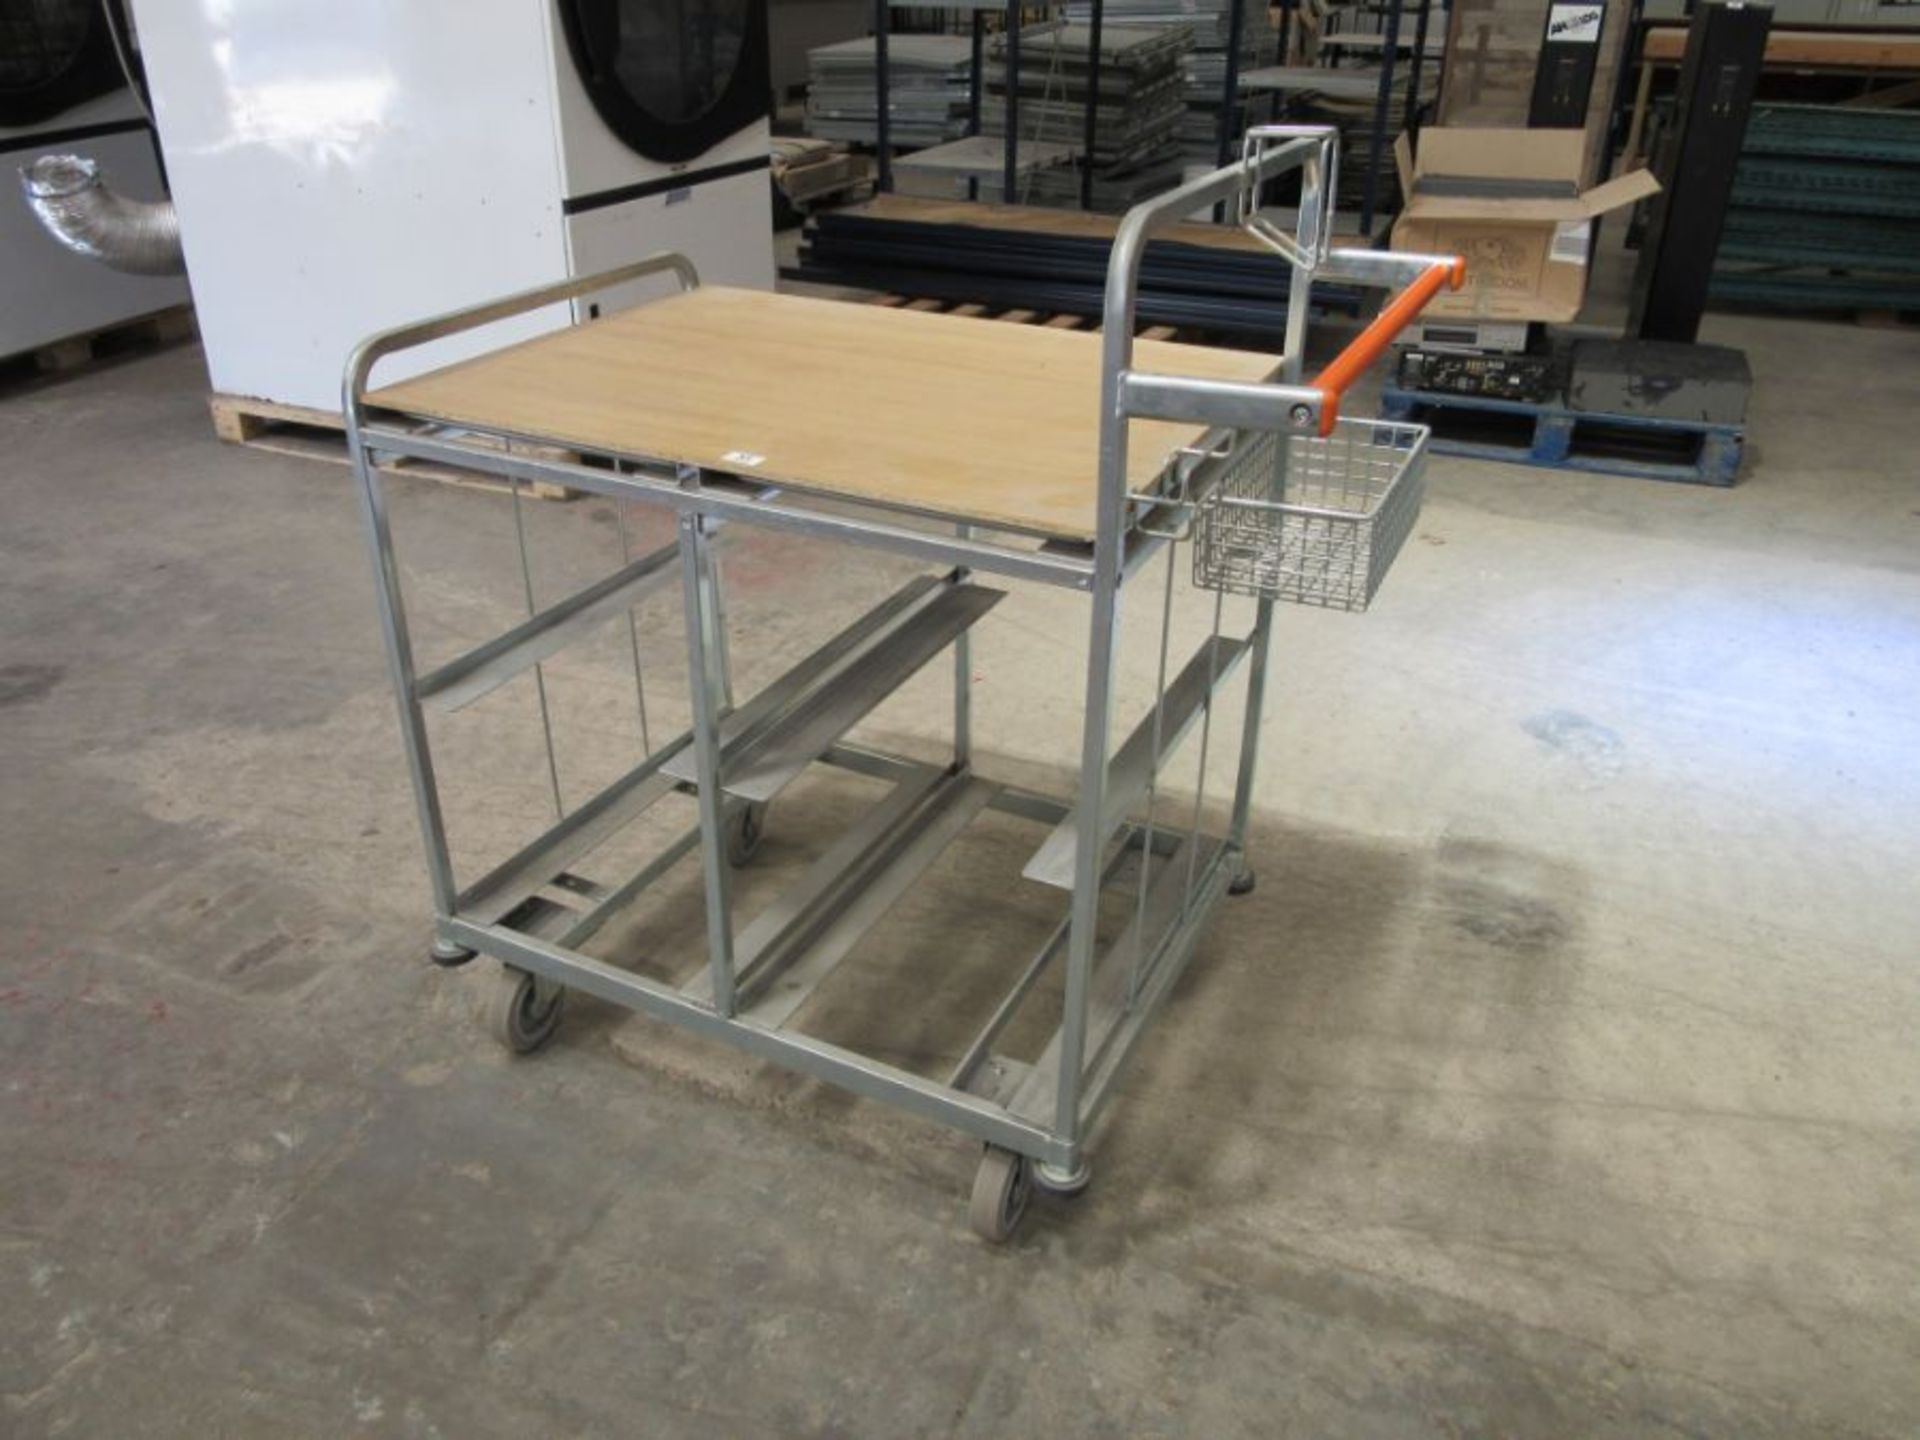 An industrial trolley